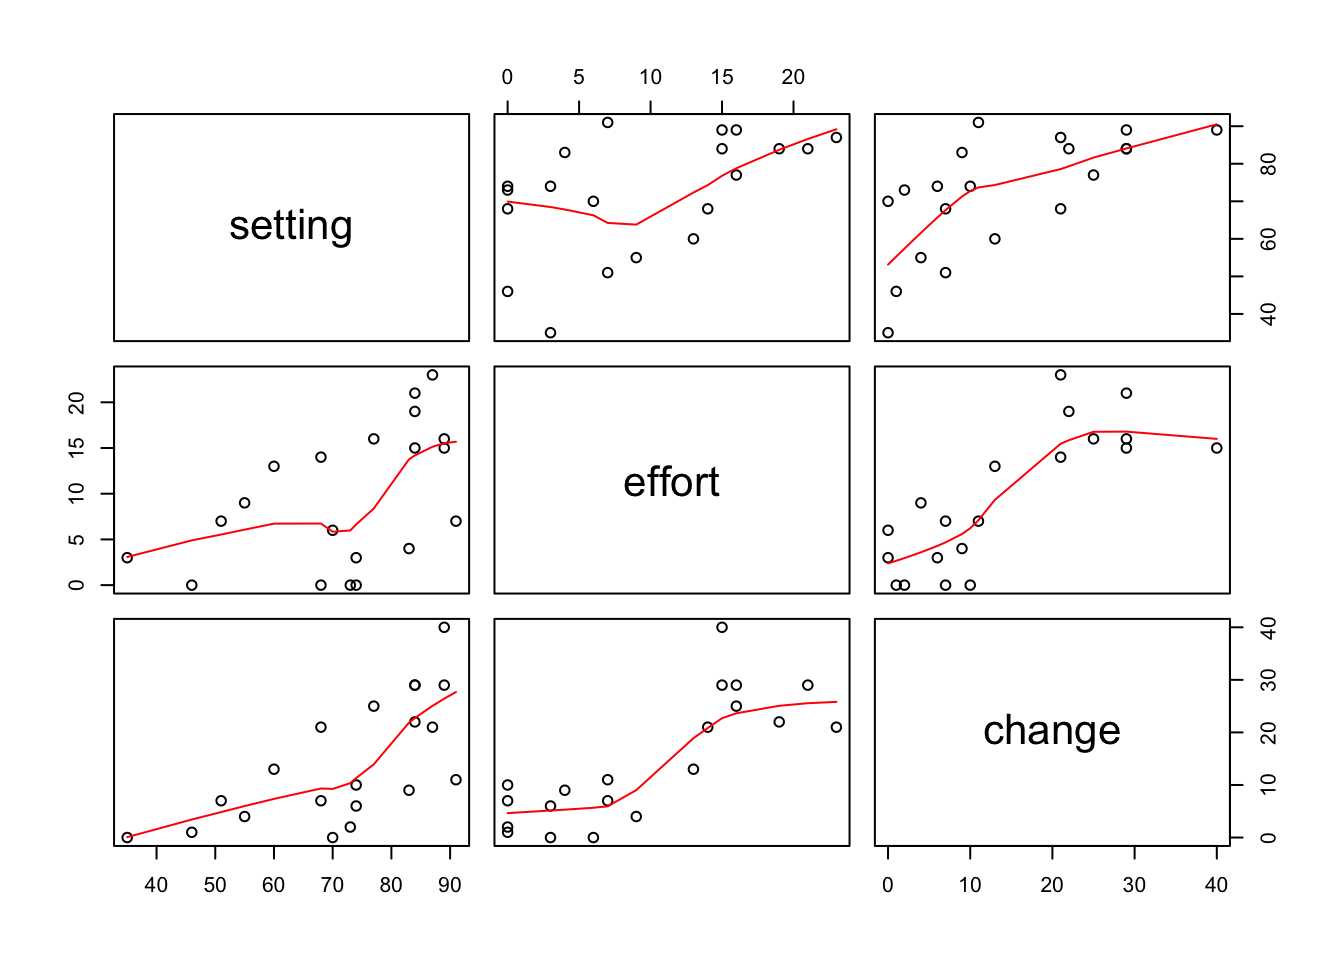 Scatterplot Matrix of Princeton Data